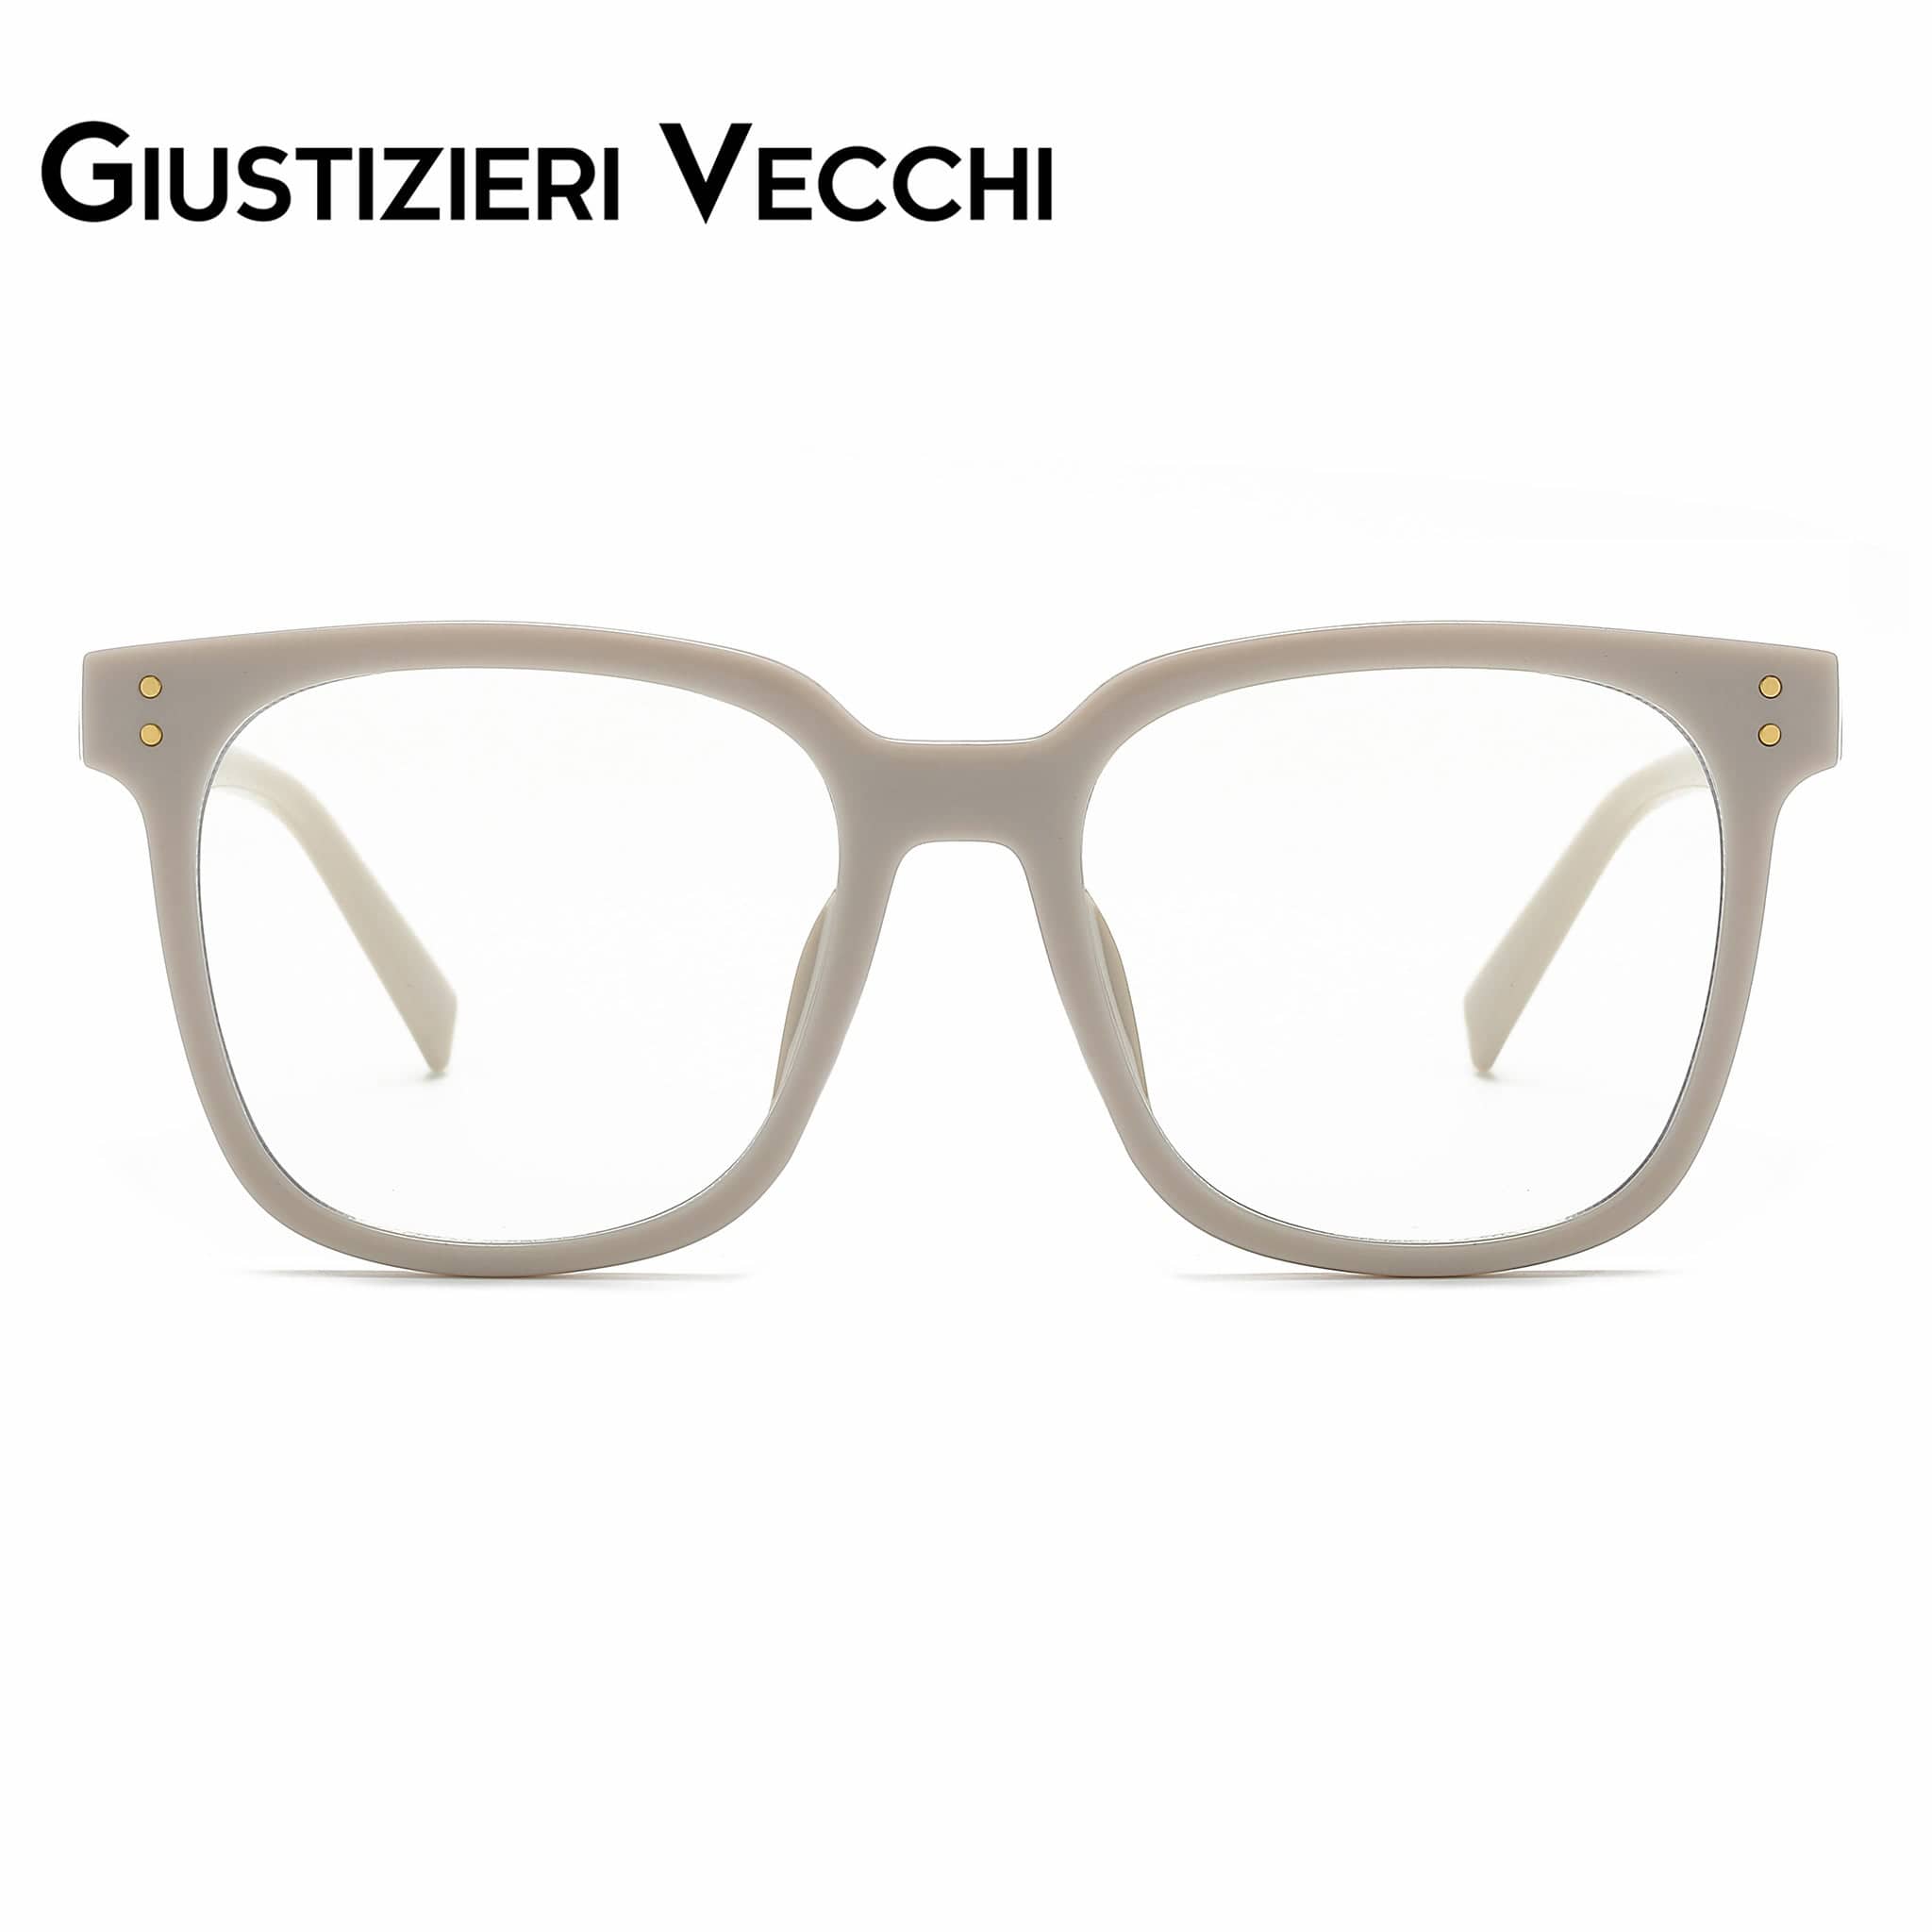 GIUSTIZIERI VECCHI Eyeglasses Medium / Beige Gioia Tre